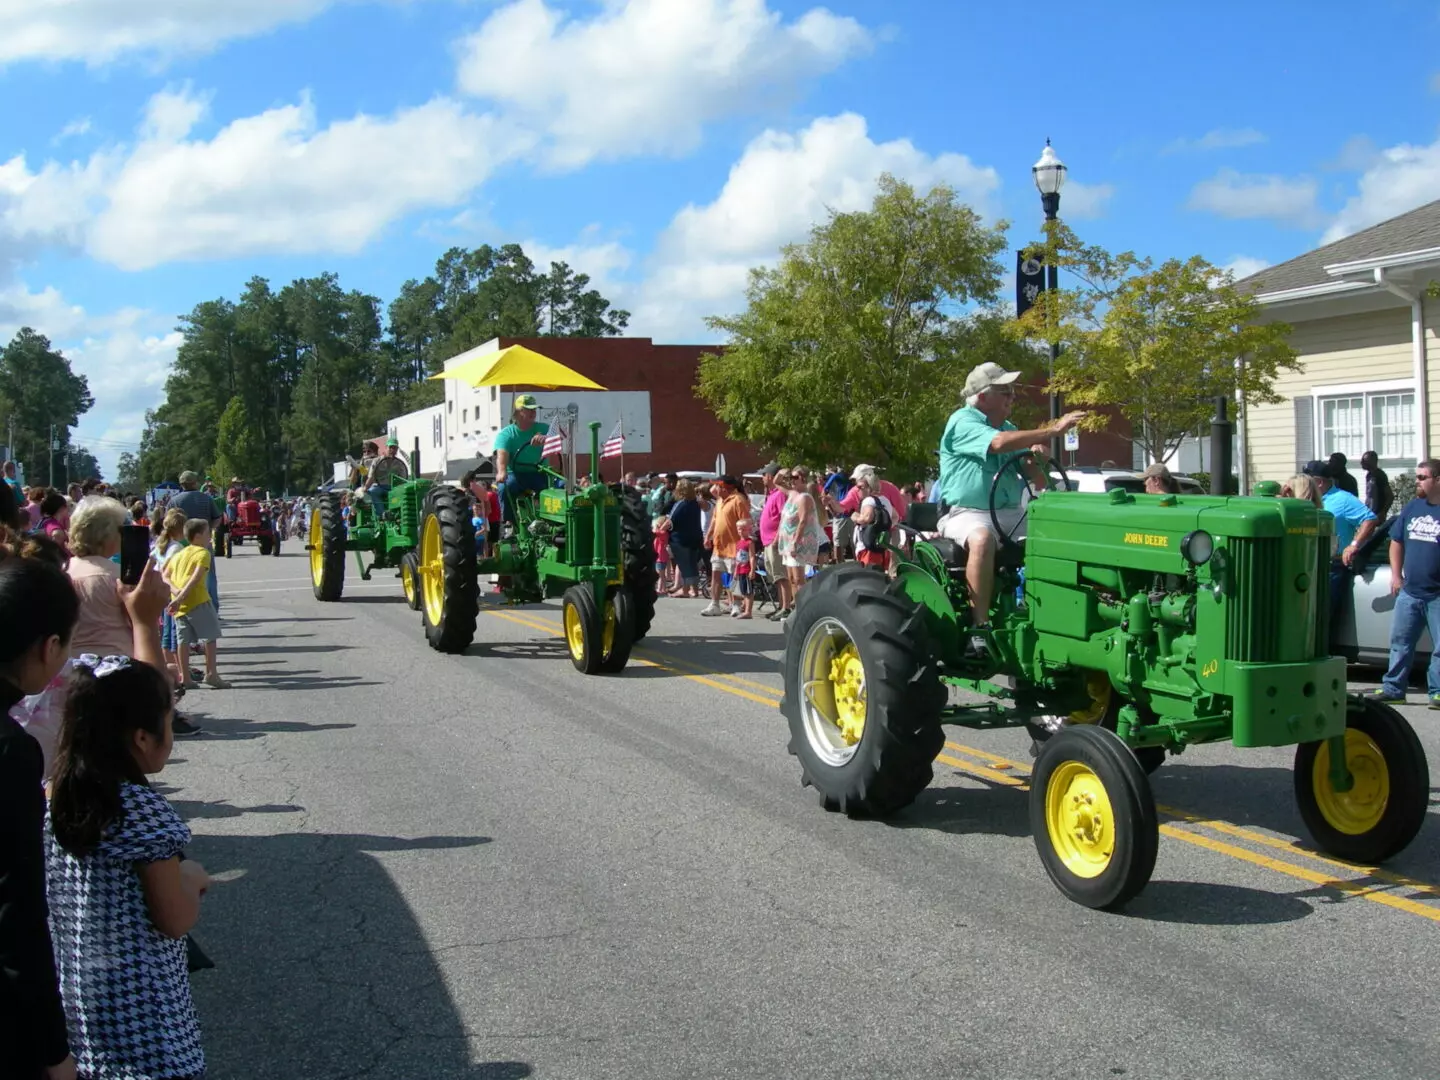 Parade of green tractors